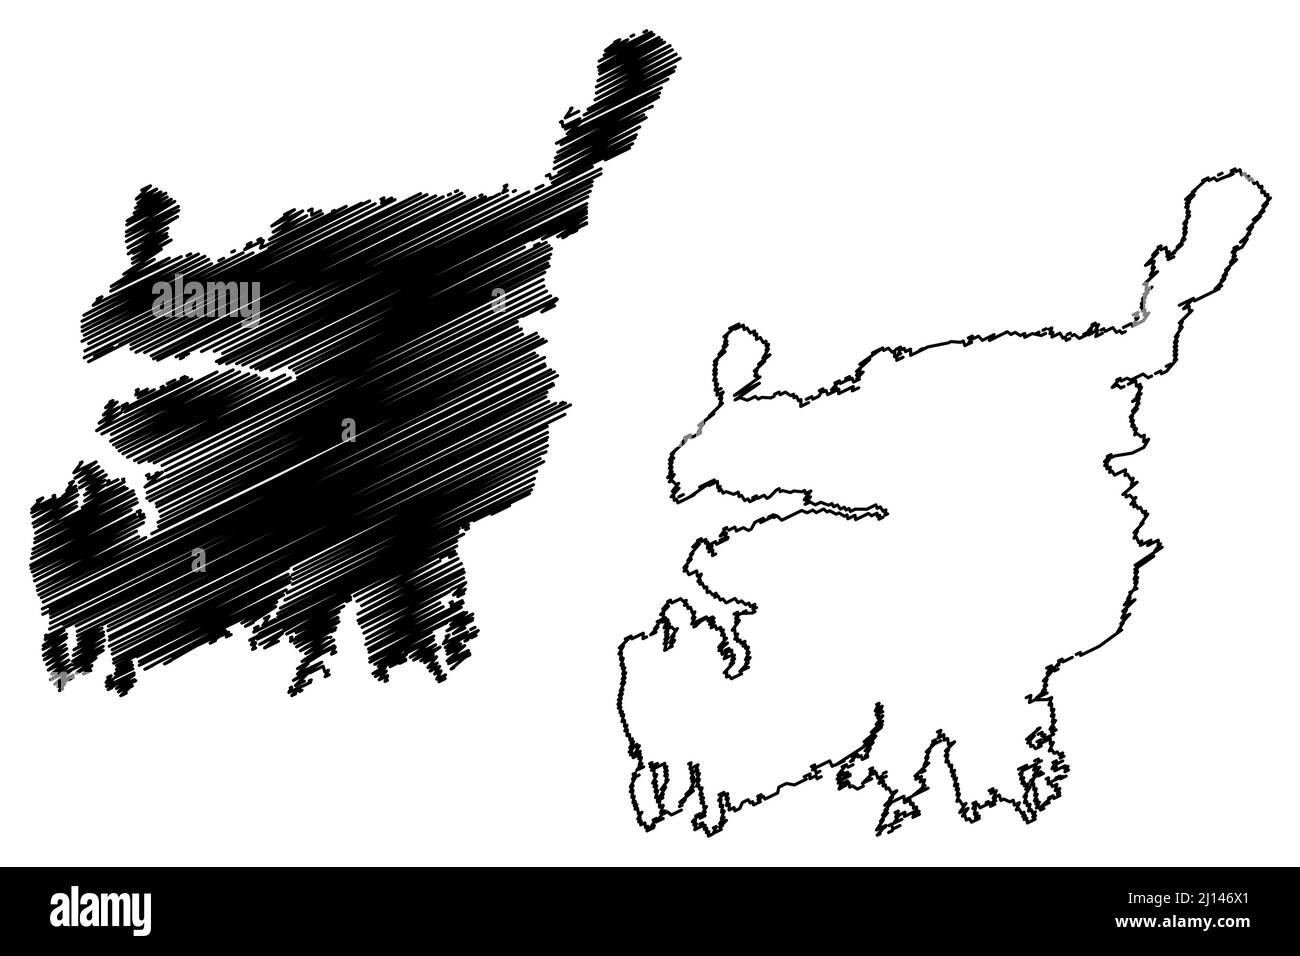 Kimitoon island (Republic of Finland) map vector illustration, scribble sketch Kemionsaari map Stock Vector